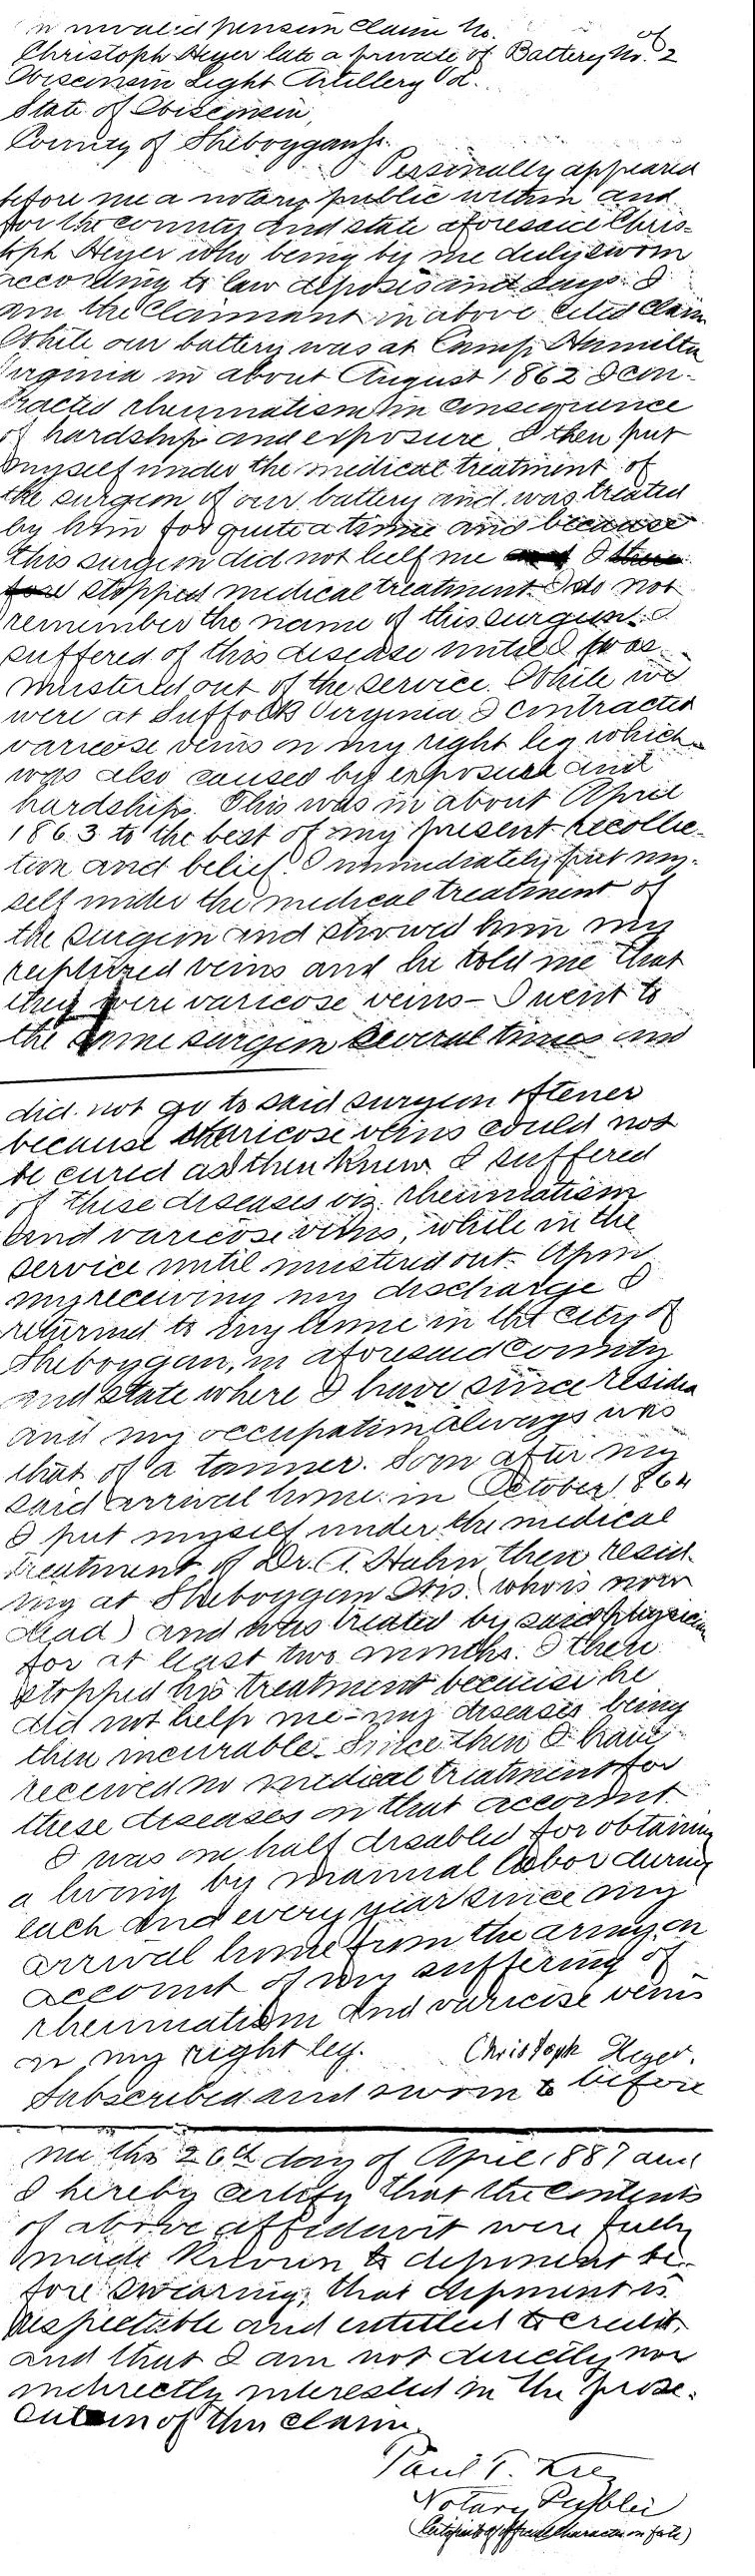 Heyer - Civil War pension file extract